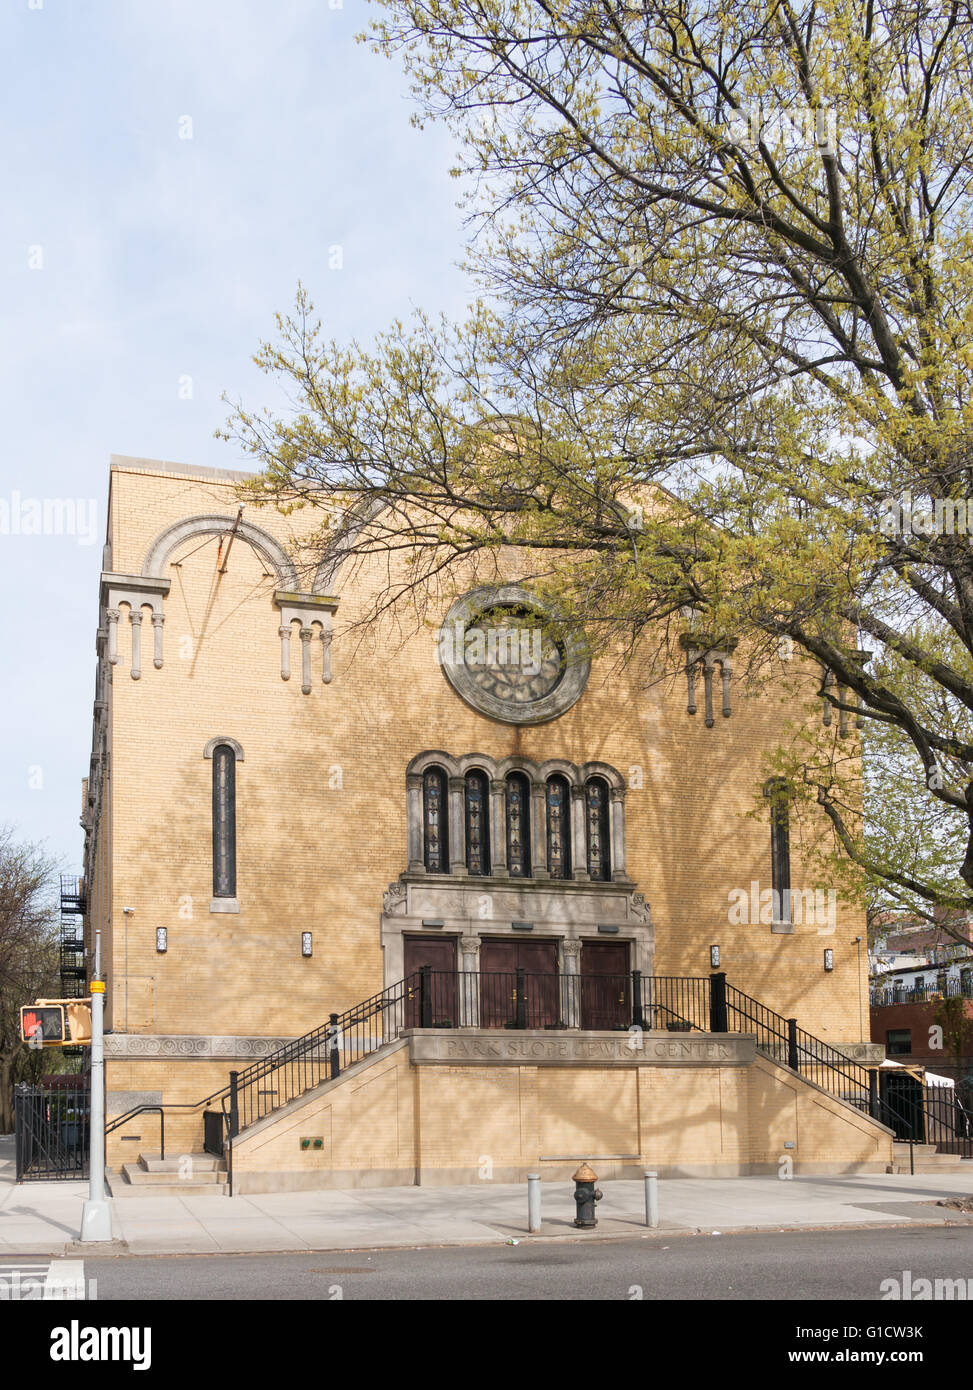 Brooklyn Conservative synagogue or Jewish Center, Brooklyn, New York, USA Stock Photo